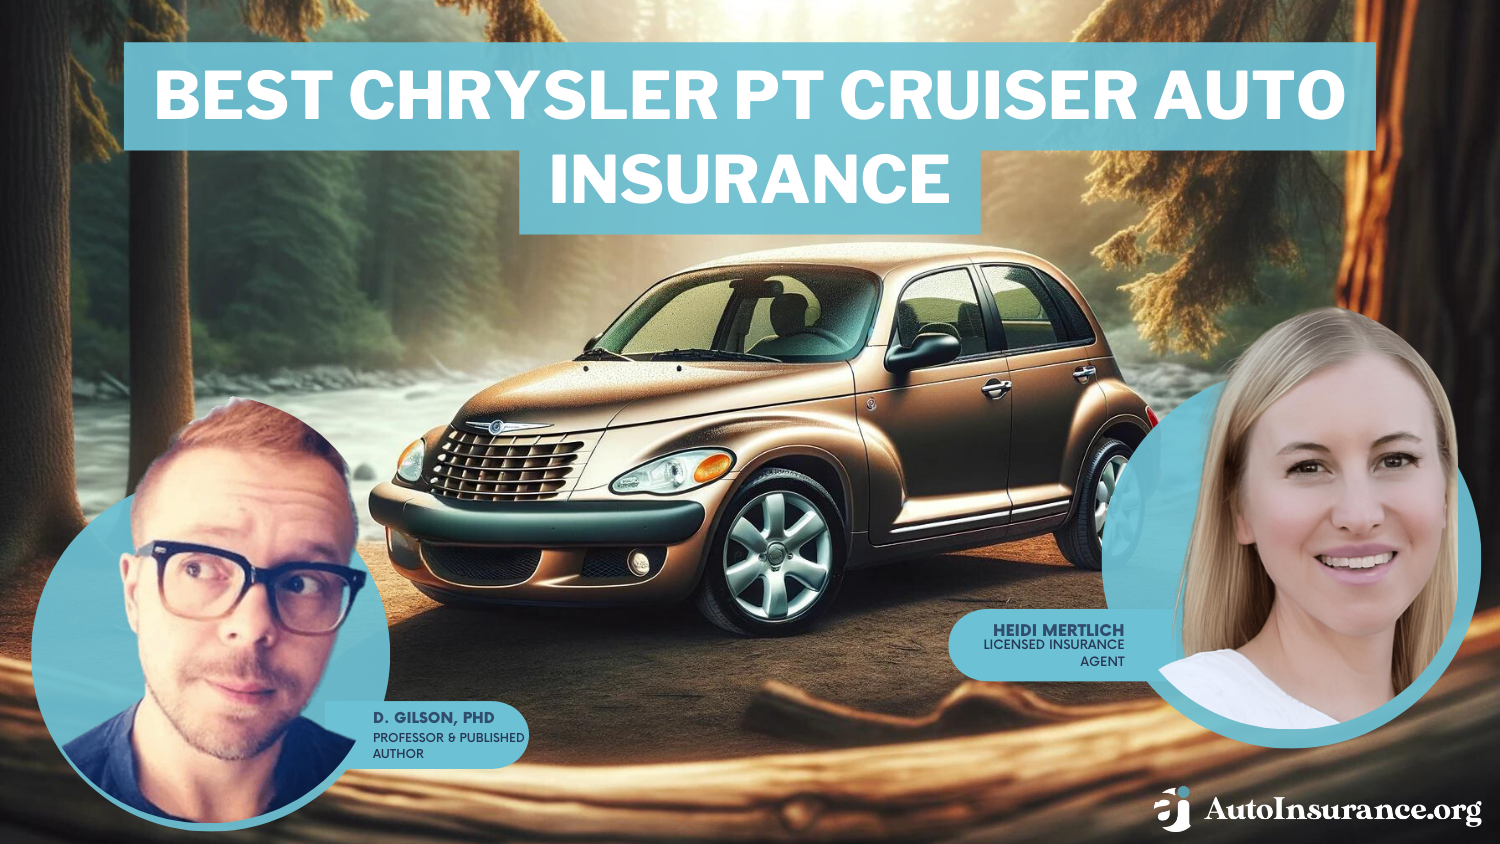 Best Chrysler PT Cruiser Auto Insurance: State Farm, Geico, Progressive